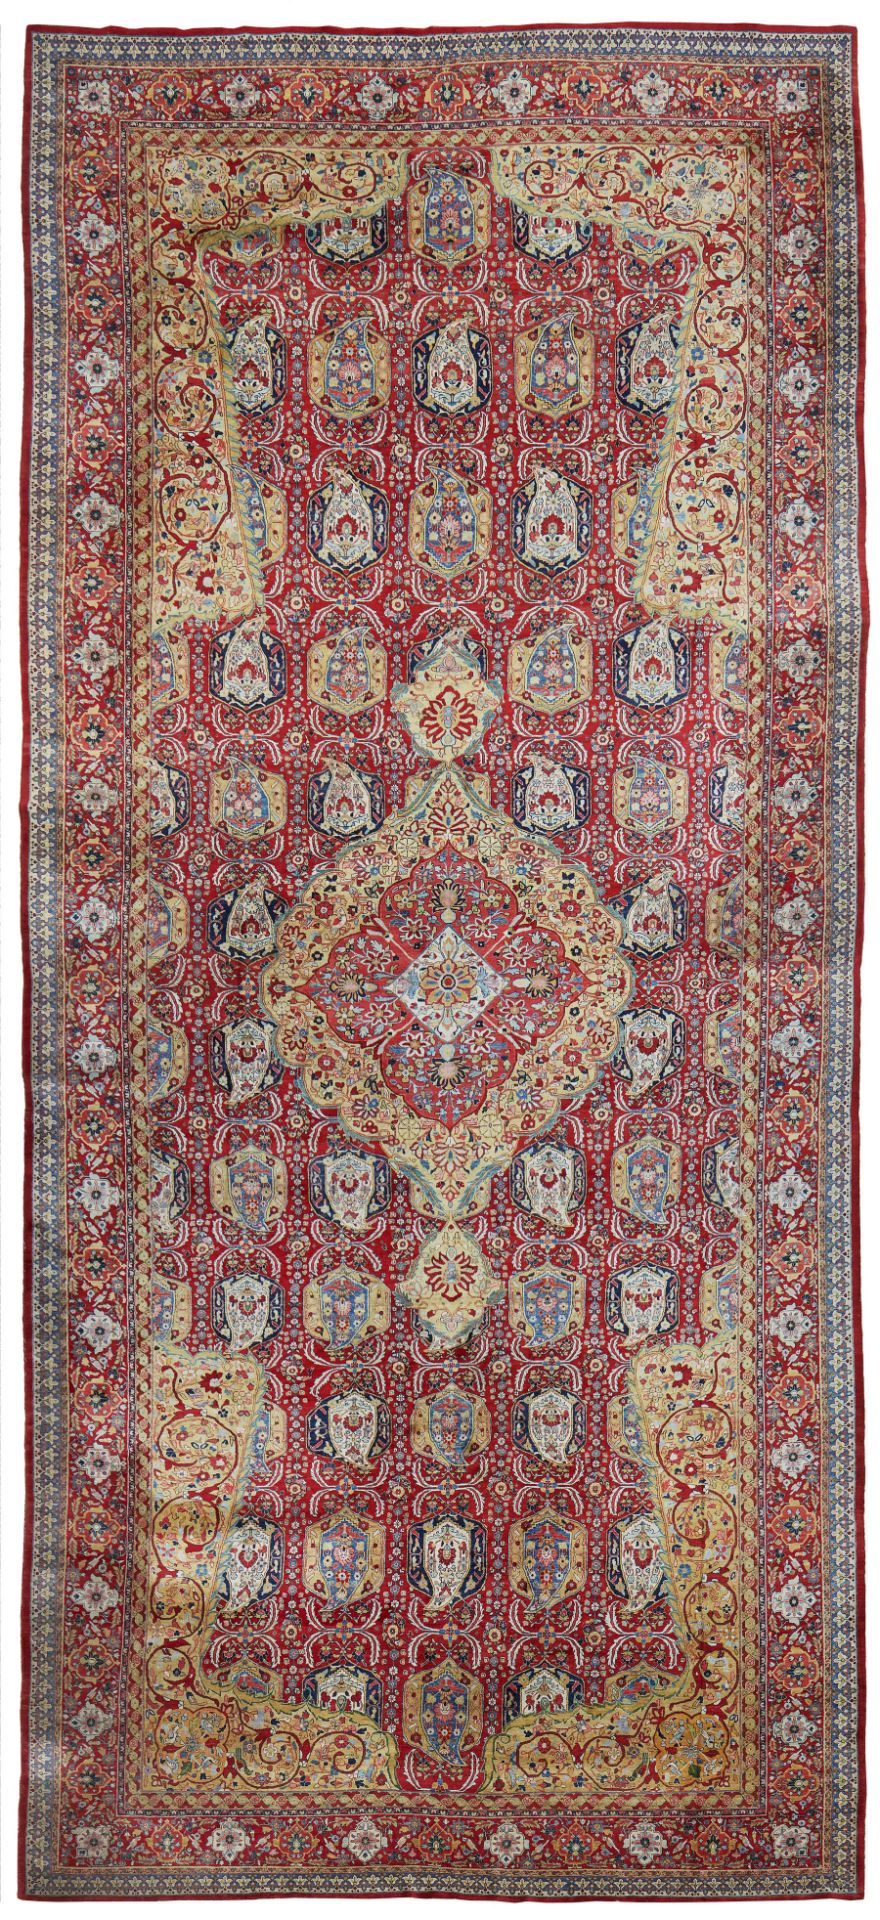 The Cologne City Hall Carpets, An Iranian carpet